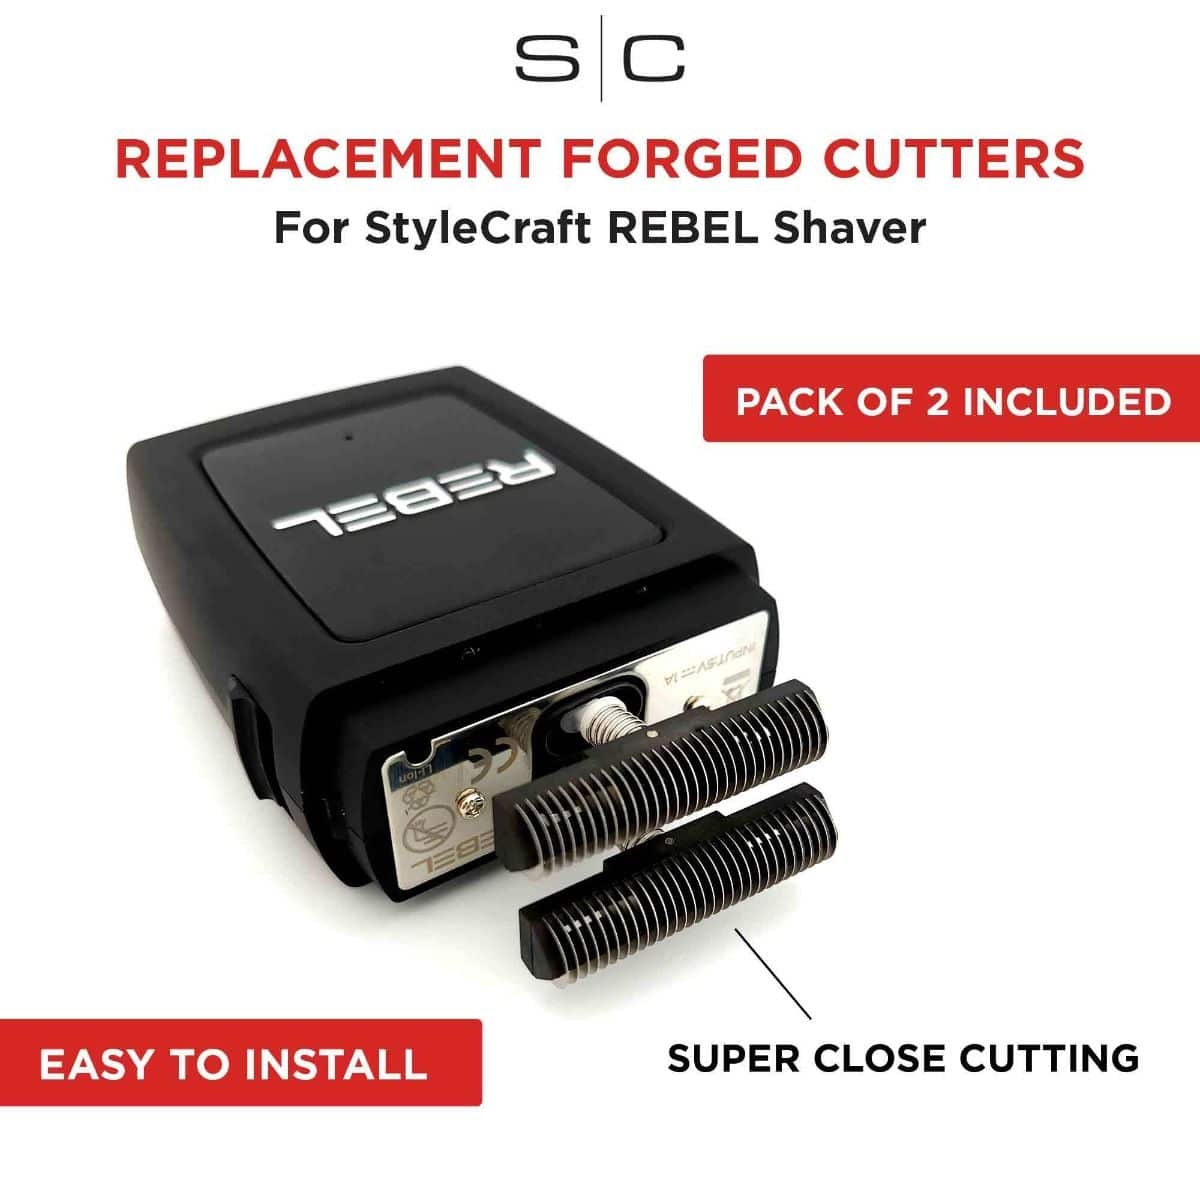 Stylecraft Rebel Replacement Cutters #SC514S - Info